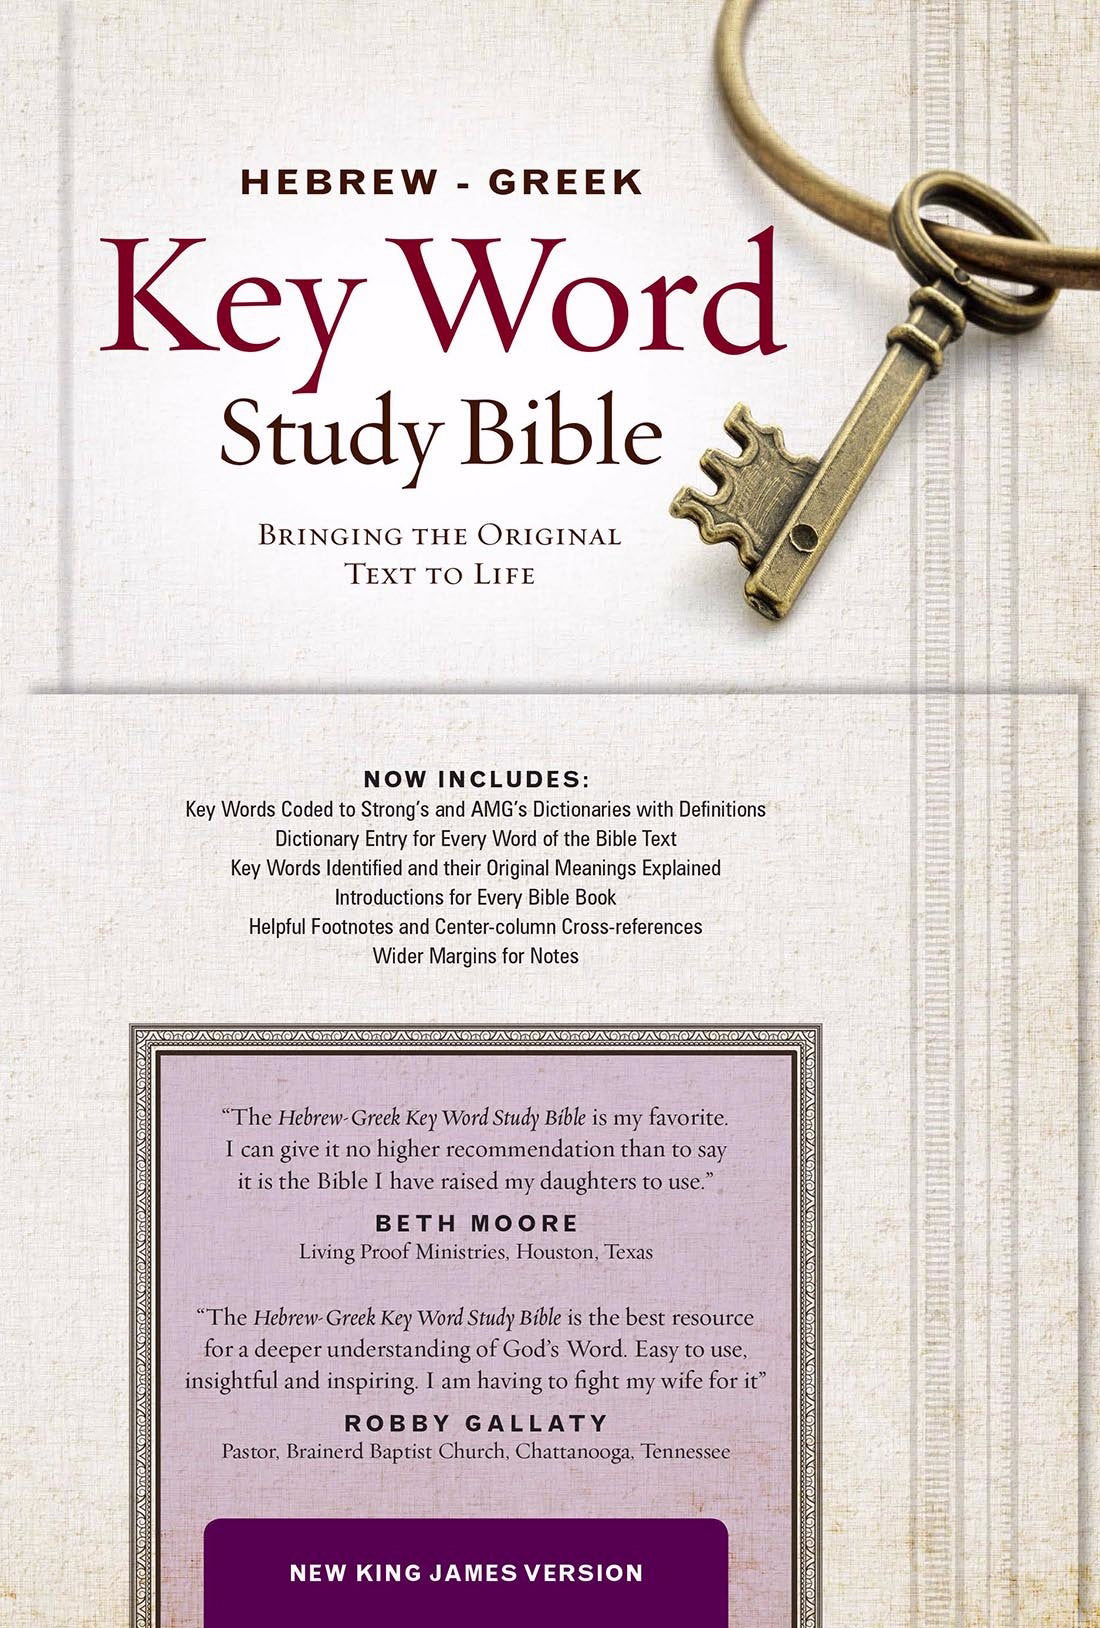 Image of The NKJV Hebrew-Greek Key Word Study Bible other